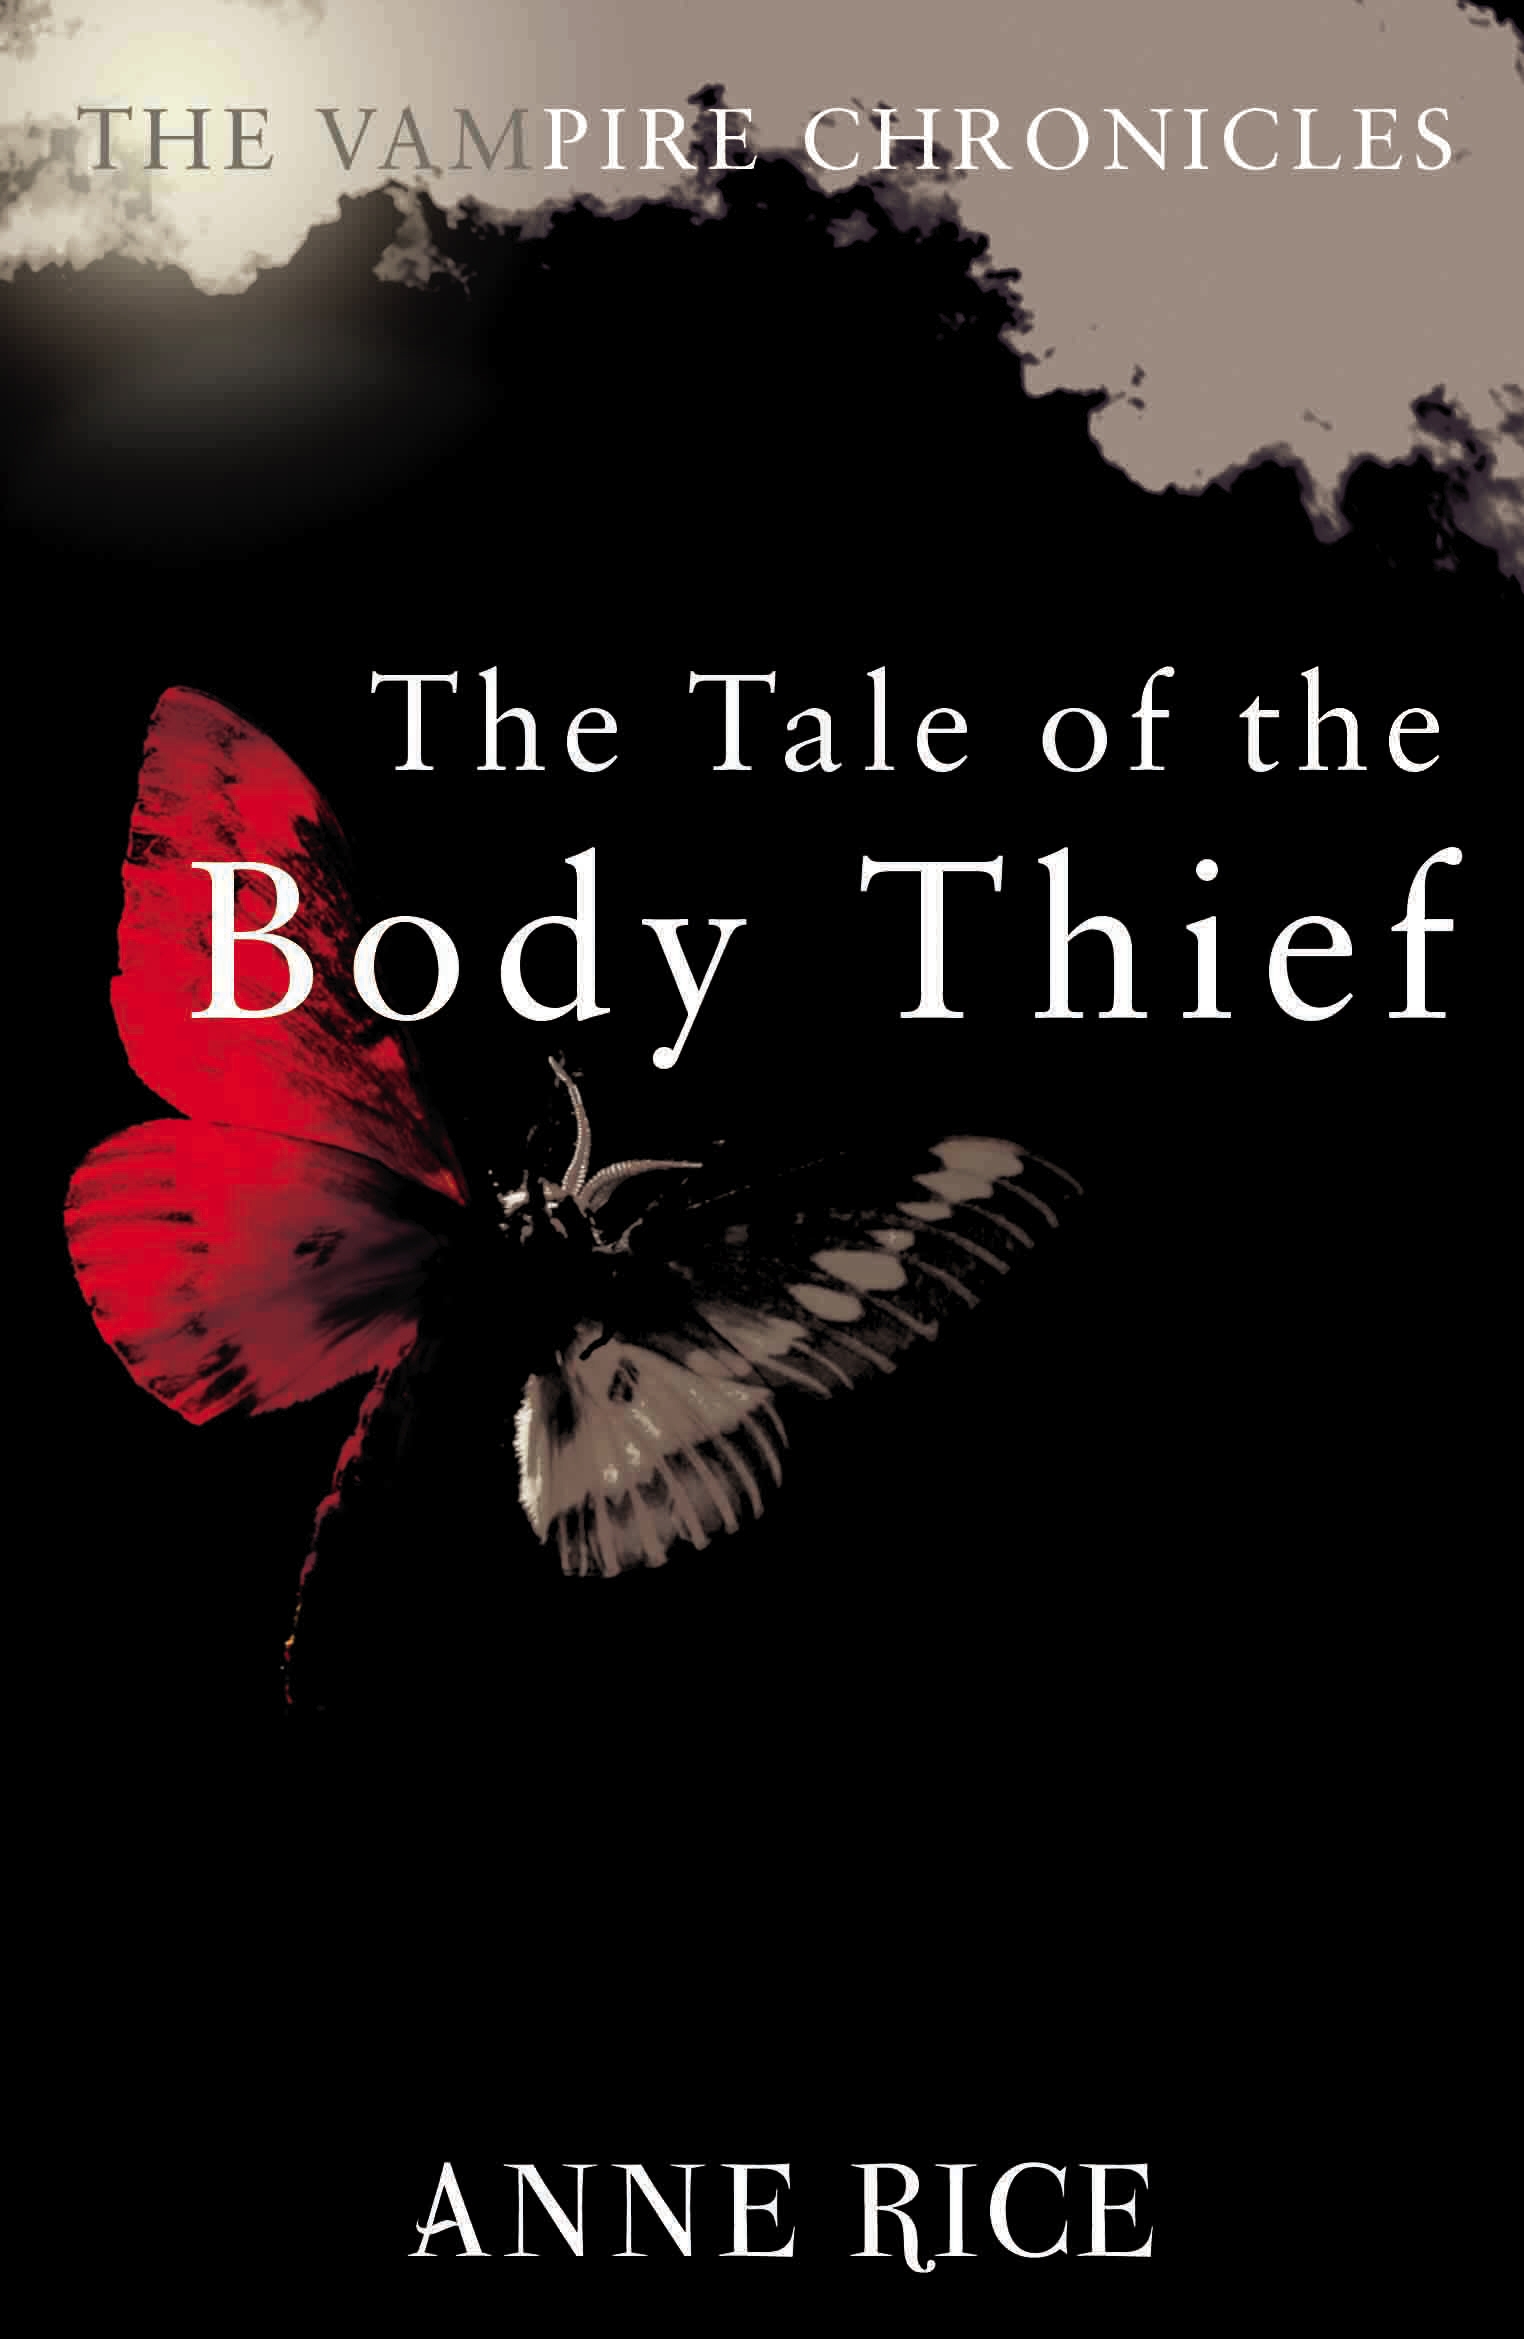 The body thief